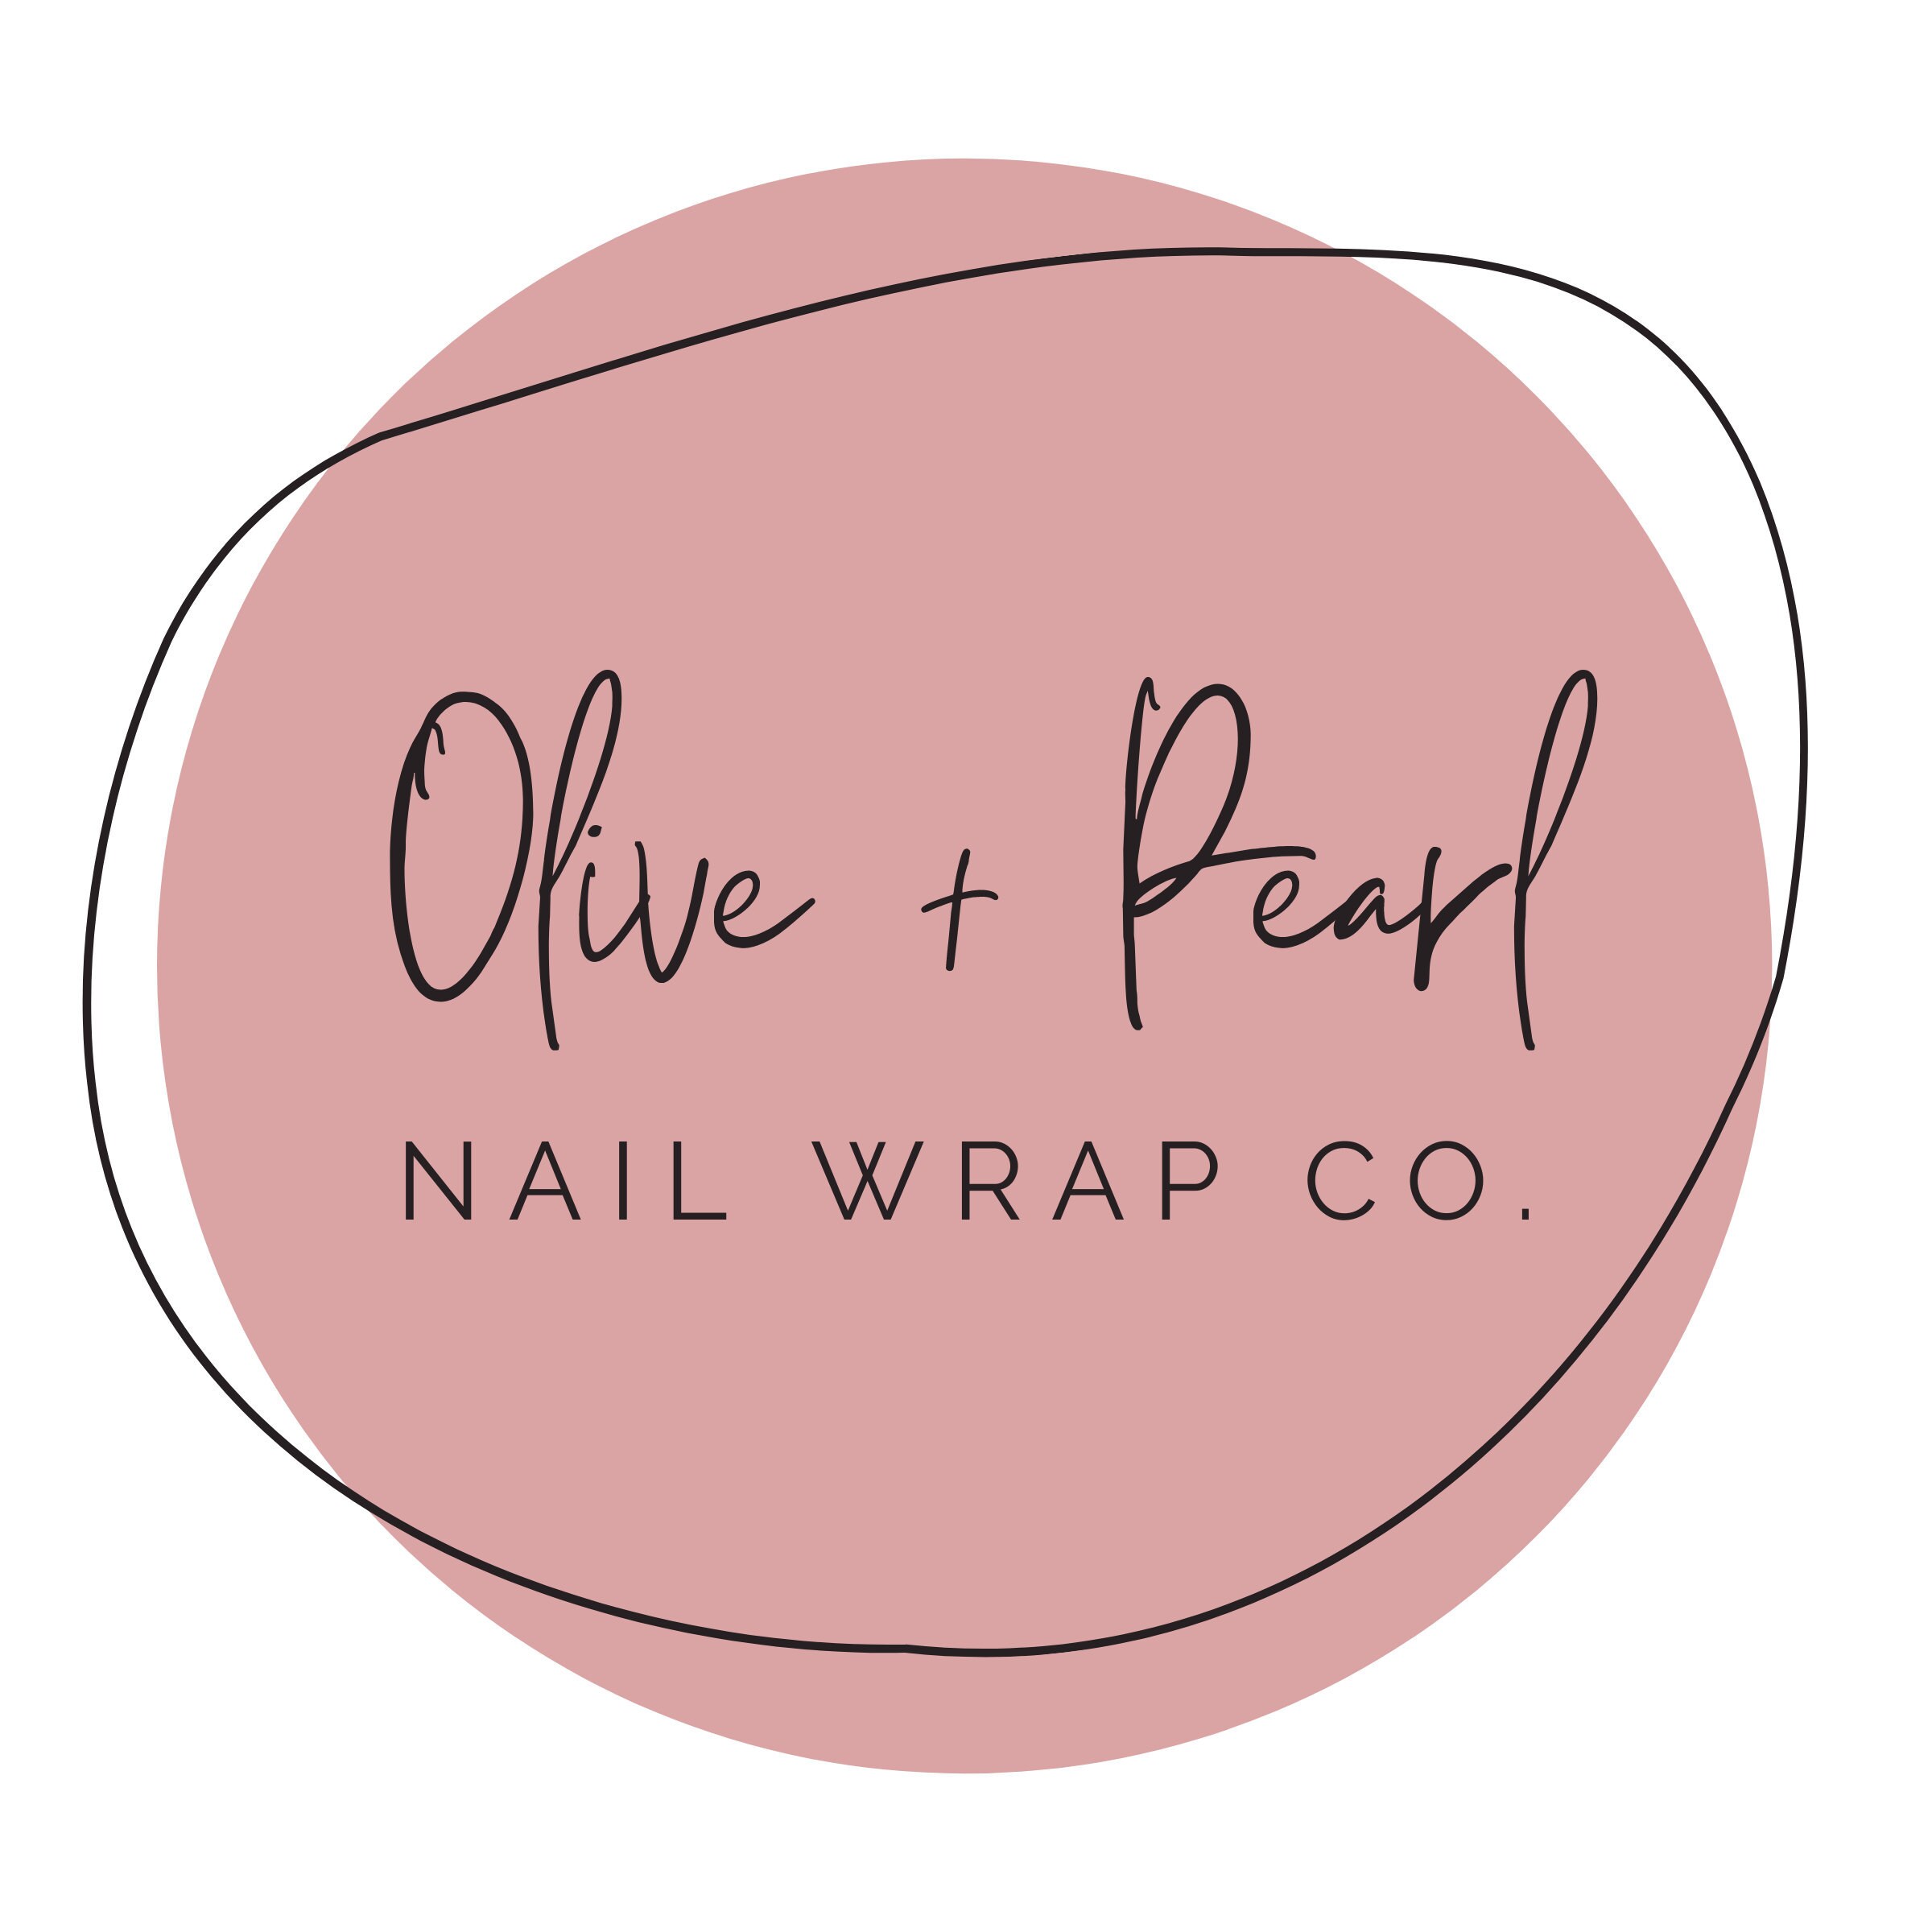 Has anyone had this problem with nail wraps? : r/NailWrapsGalore